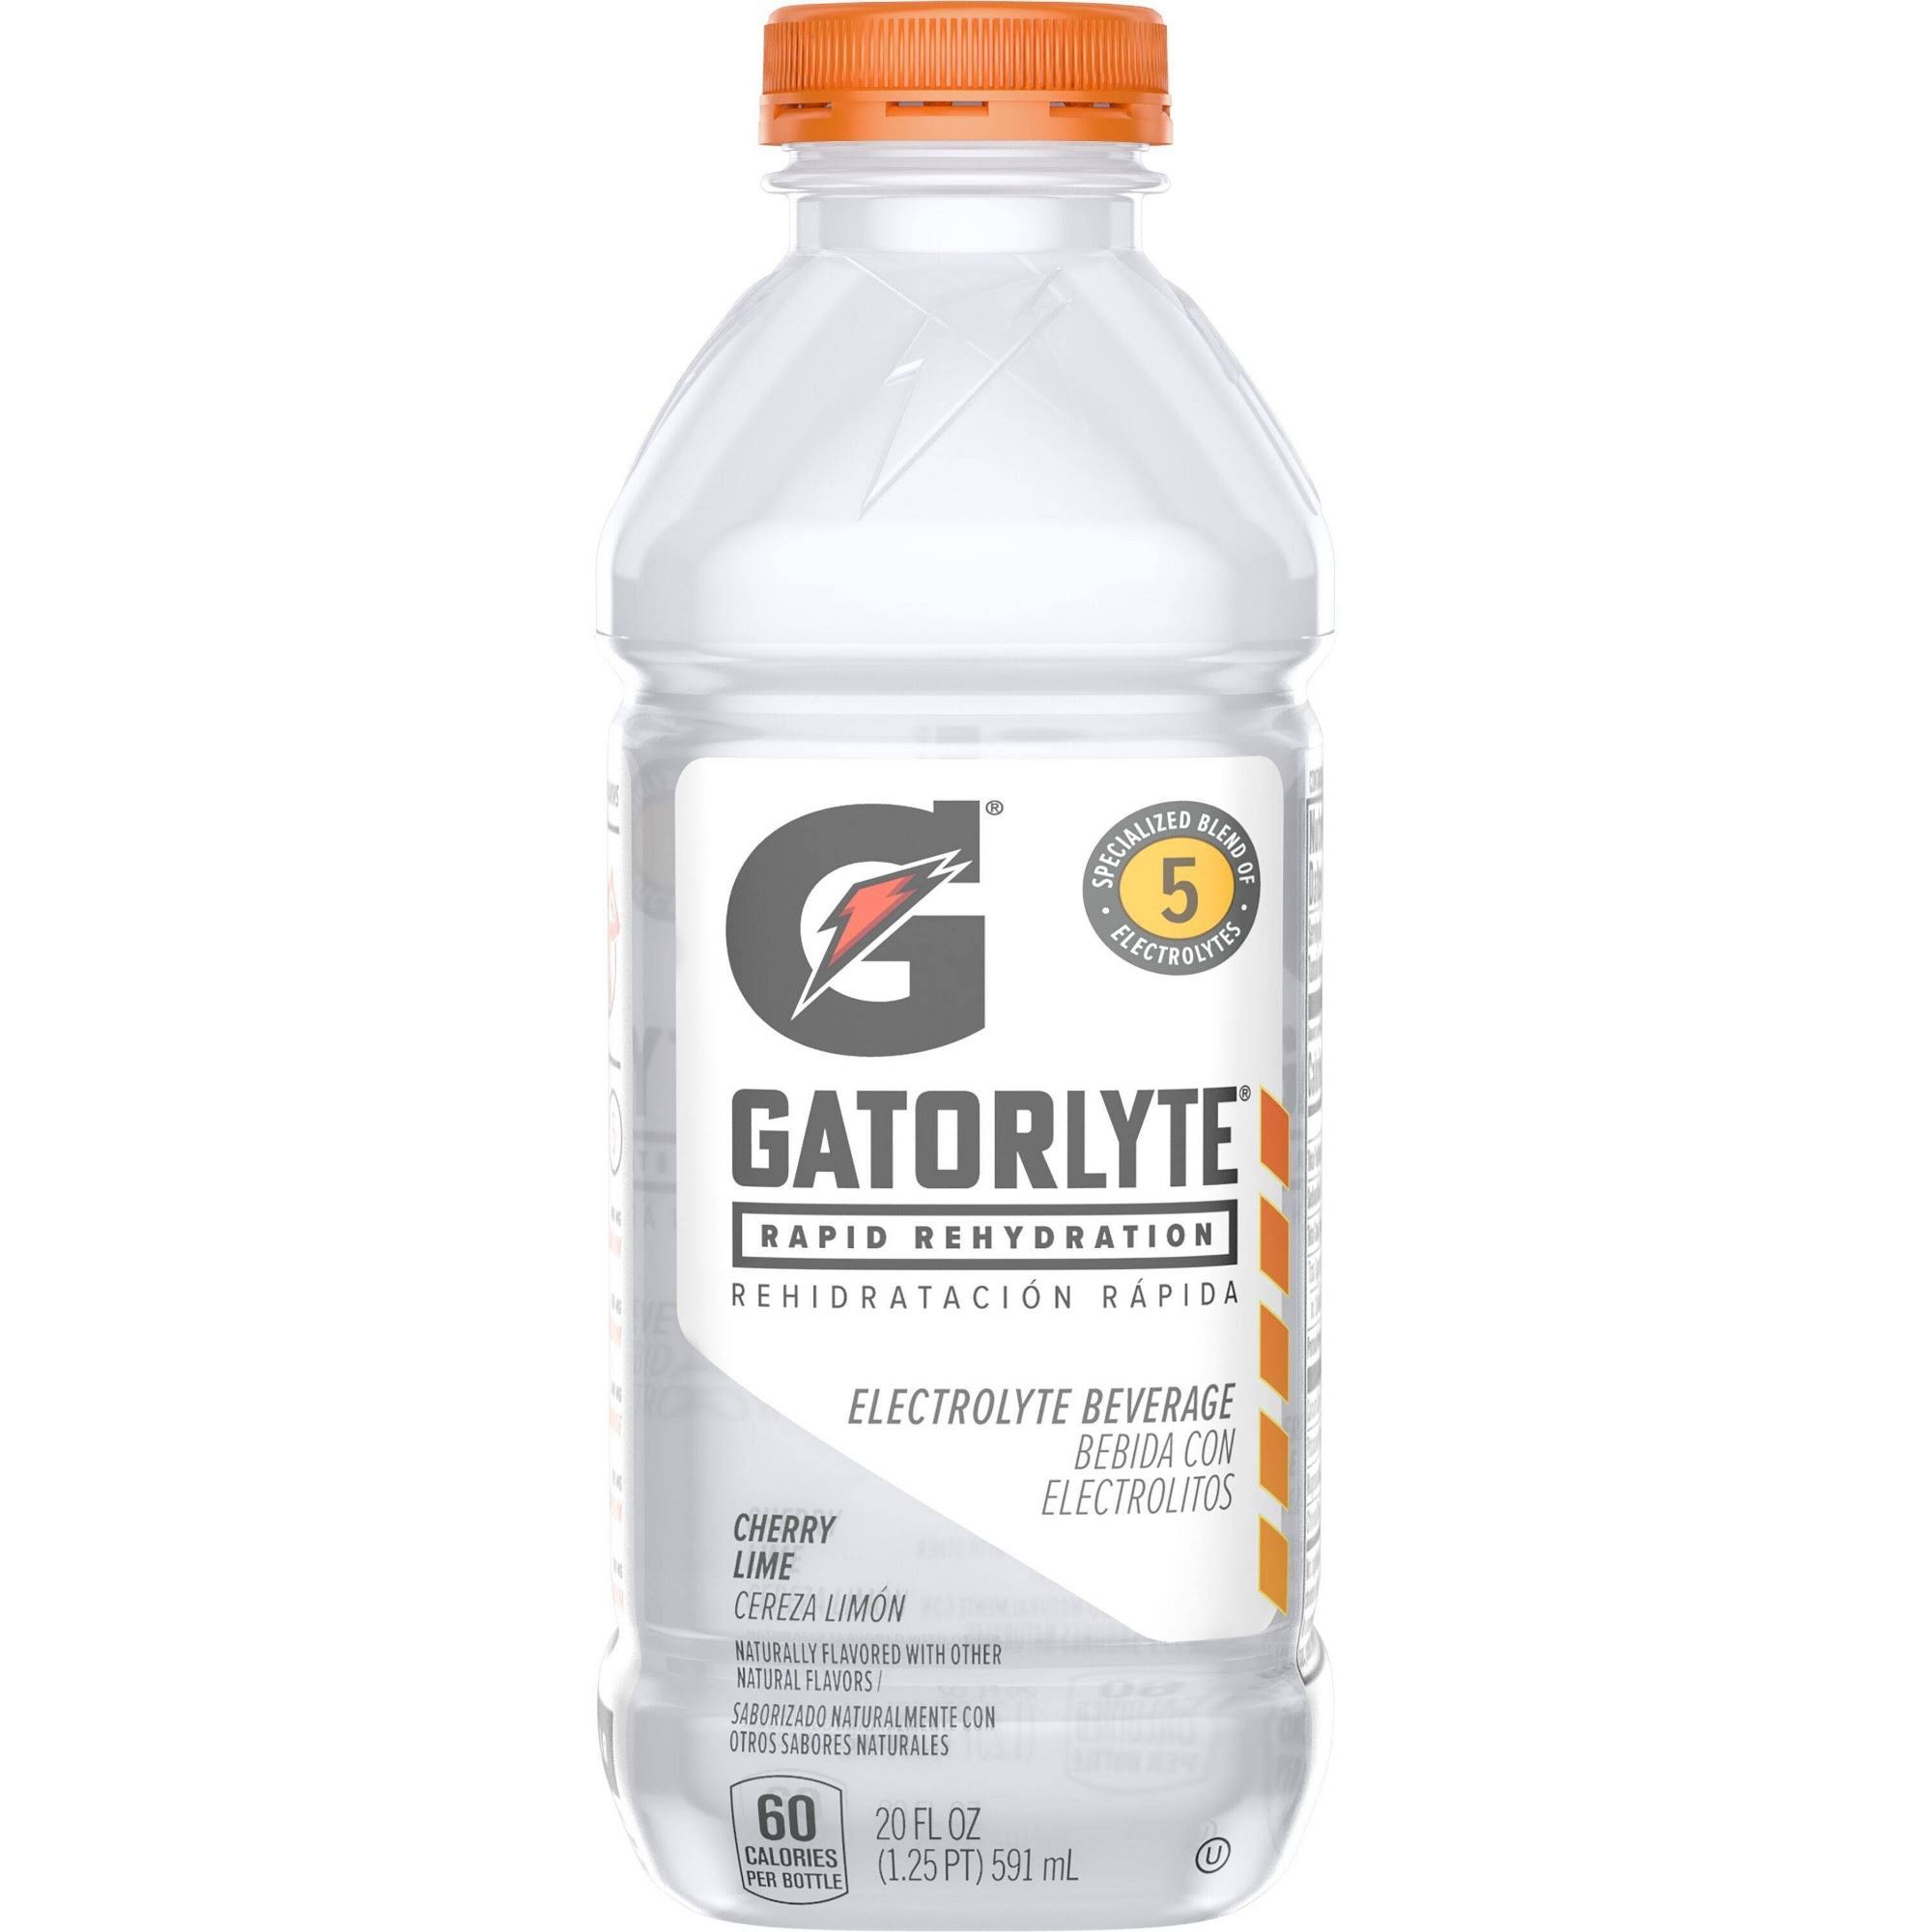 Gatorade Gatorlyte Electrolyte Beverage, Rapid Rehydration, Cherry Lime - 20 fl oz